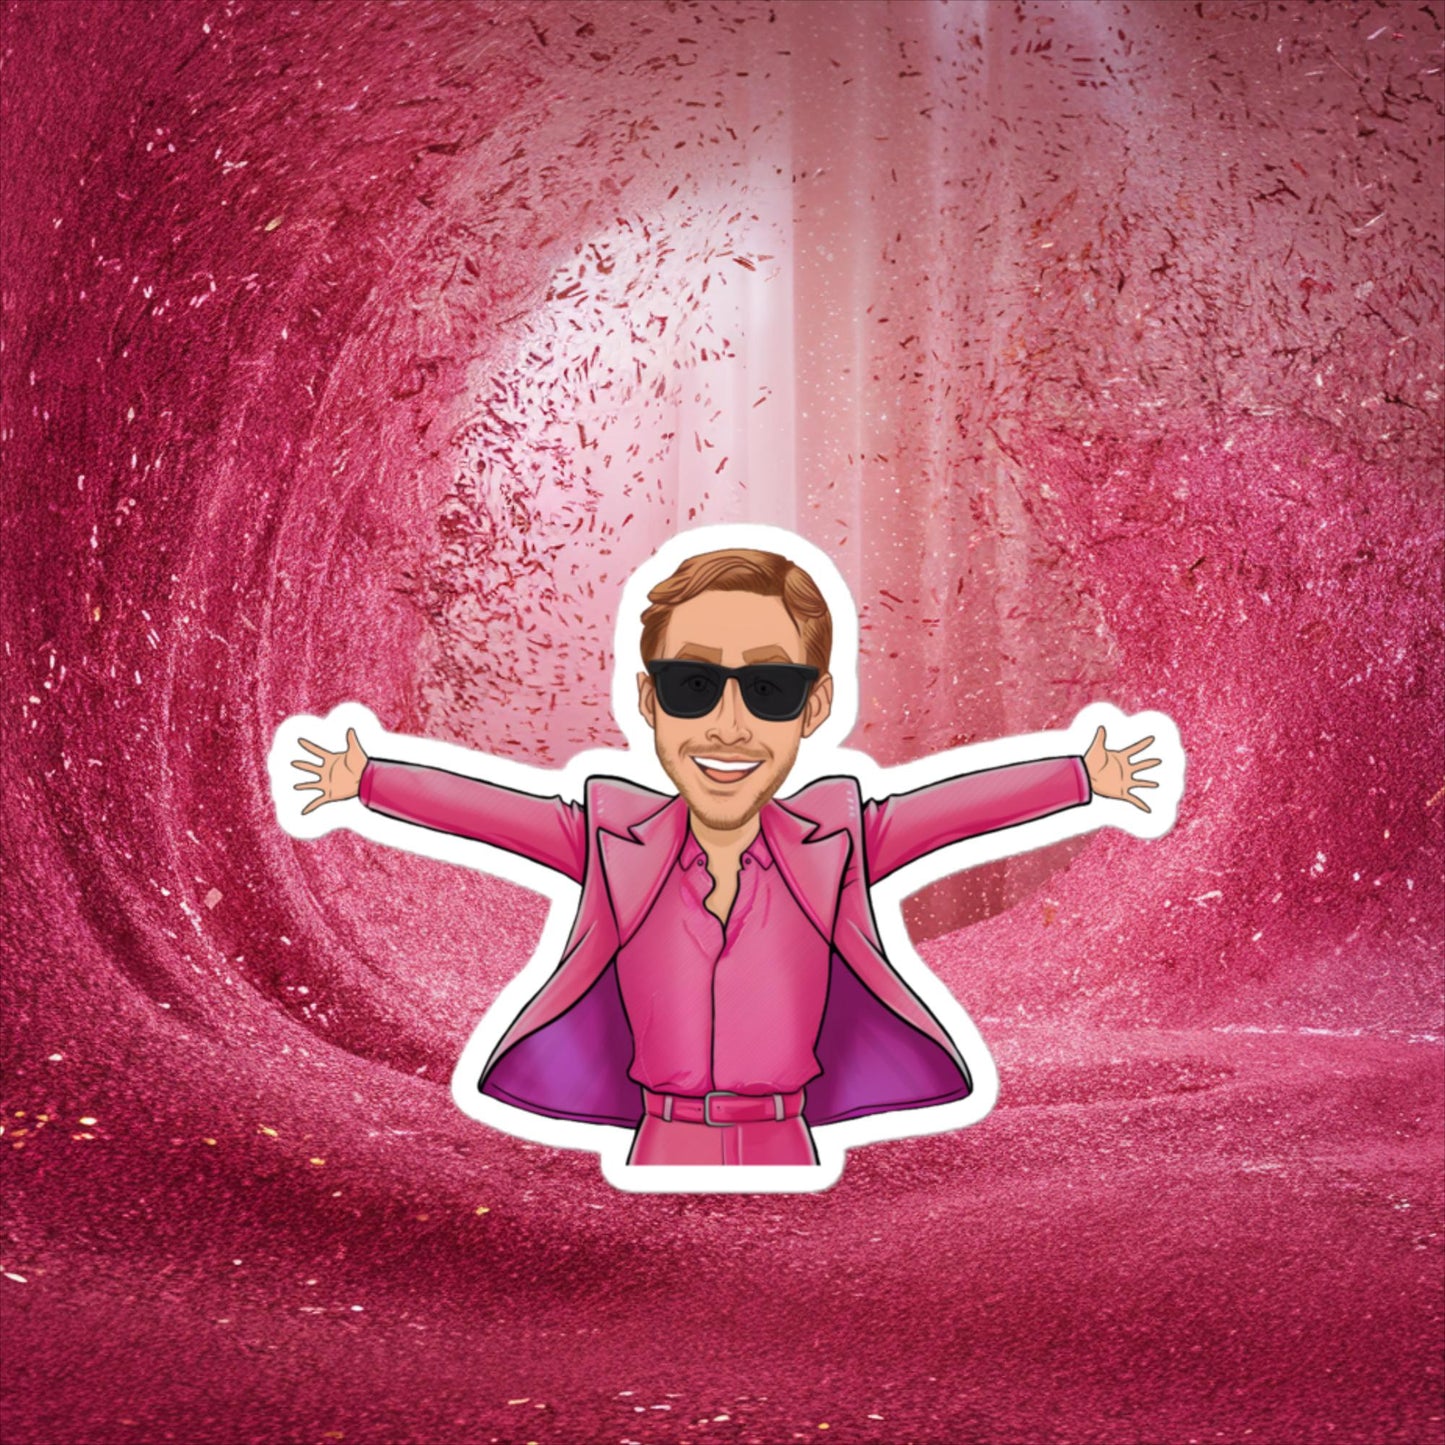 Ken Barbie Ryan Gosling I'm Just Ken Bubble-free stickers Next Cult Brand